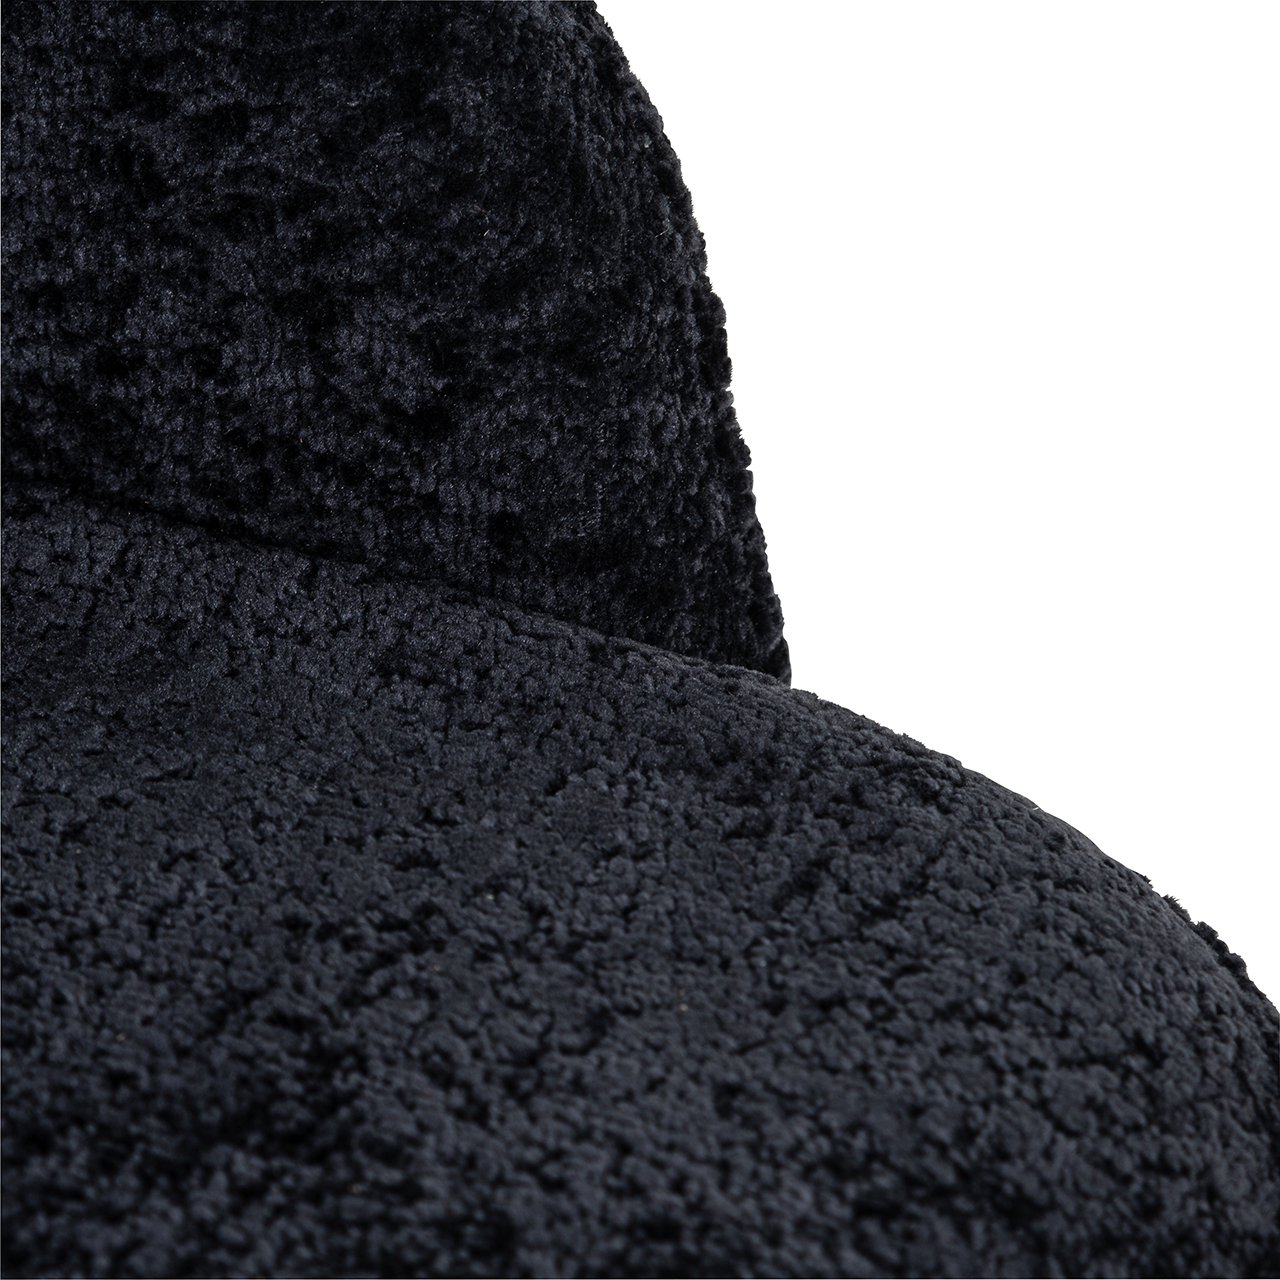 Stuhl Twiggy black chenille (Bergen 809 black chenille)